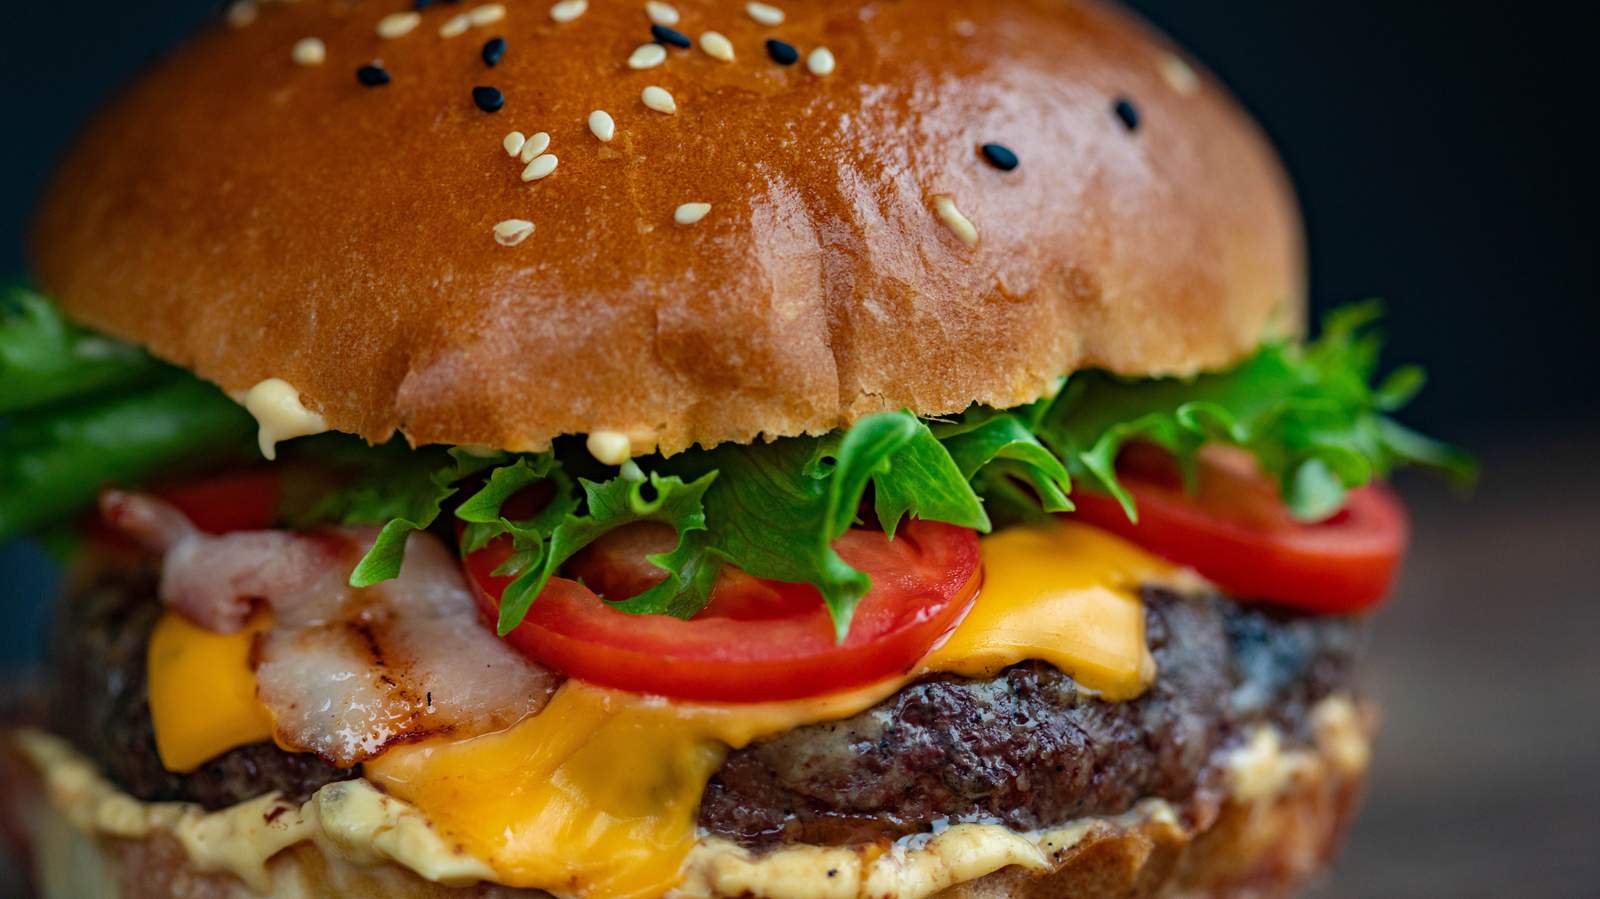 Need money? Like to eat? Company seeking ‘professional cheeseburger tester’